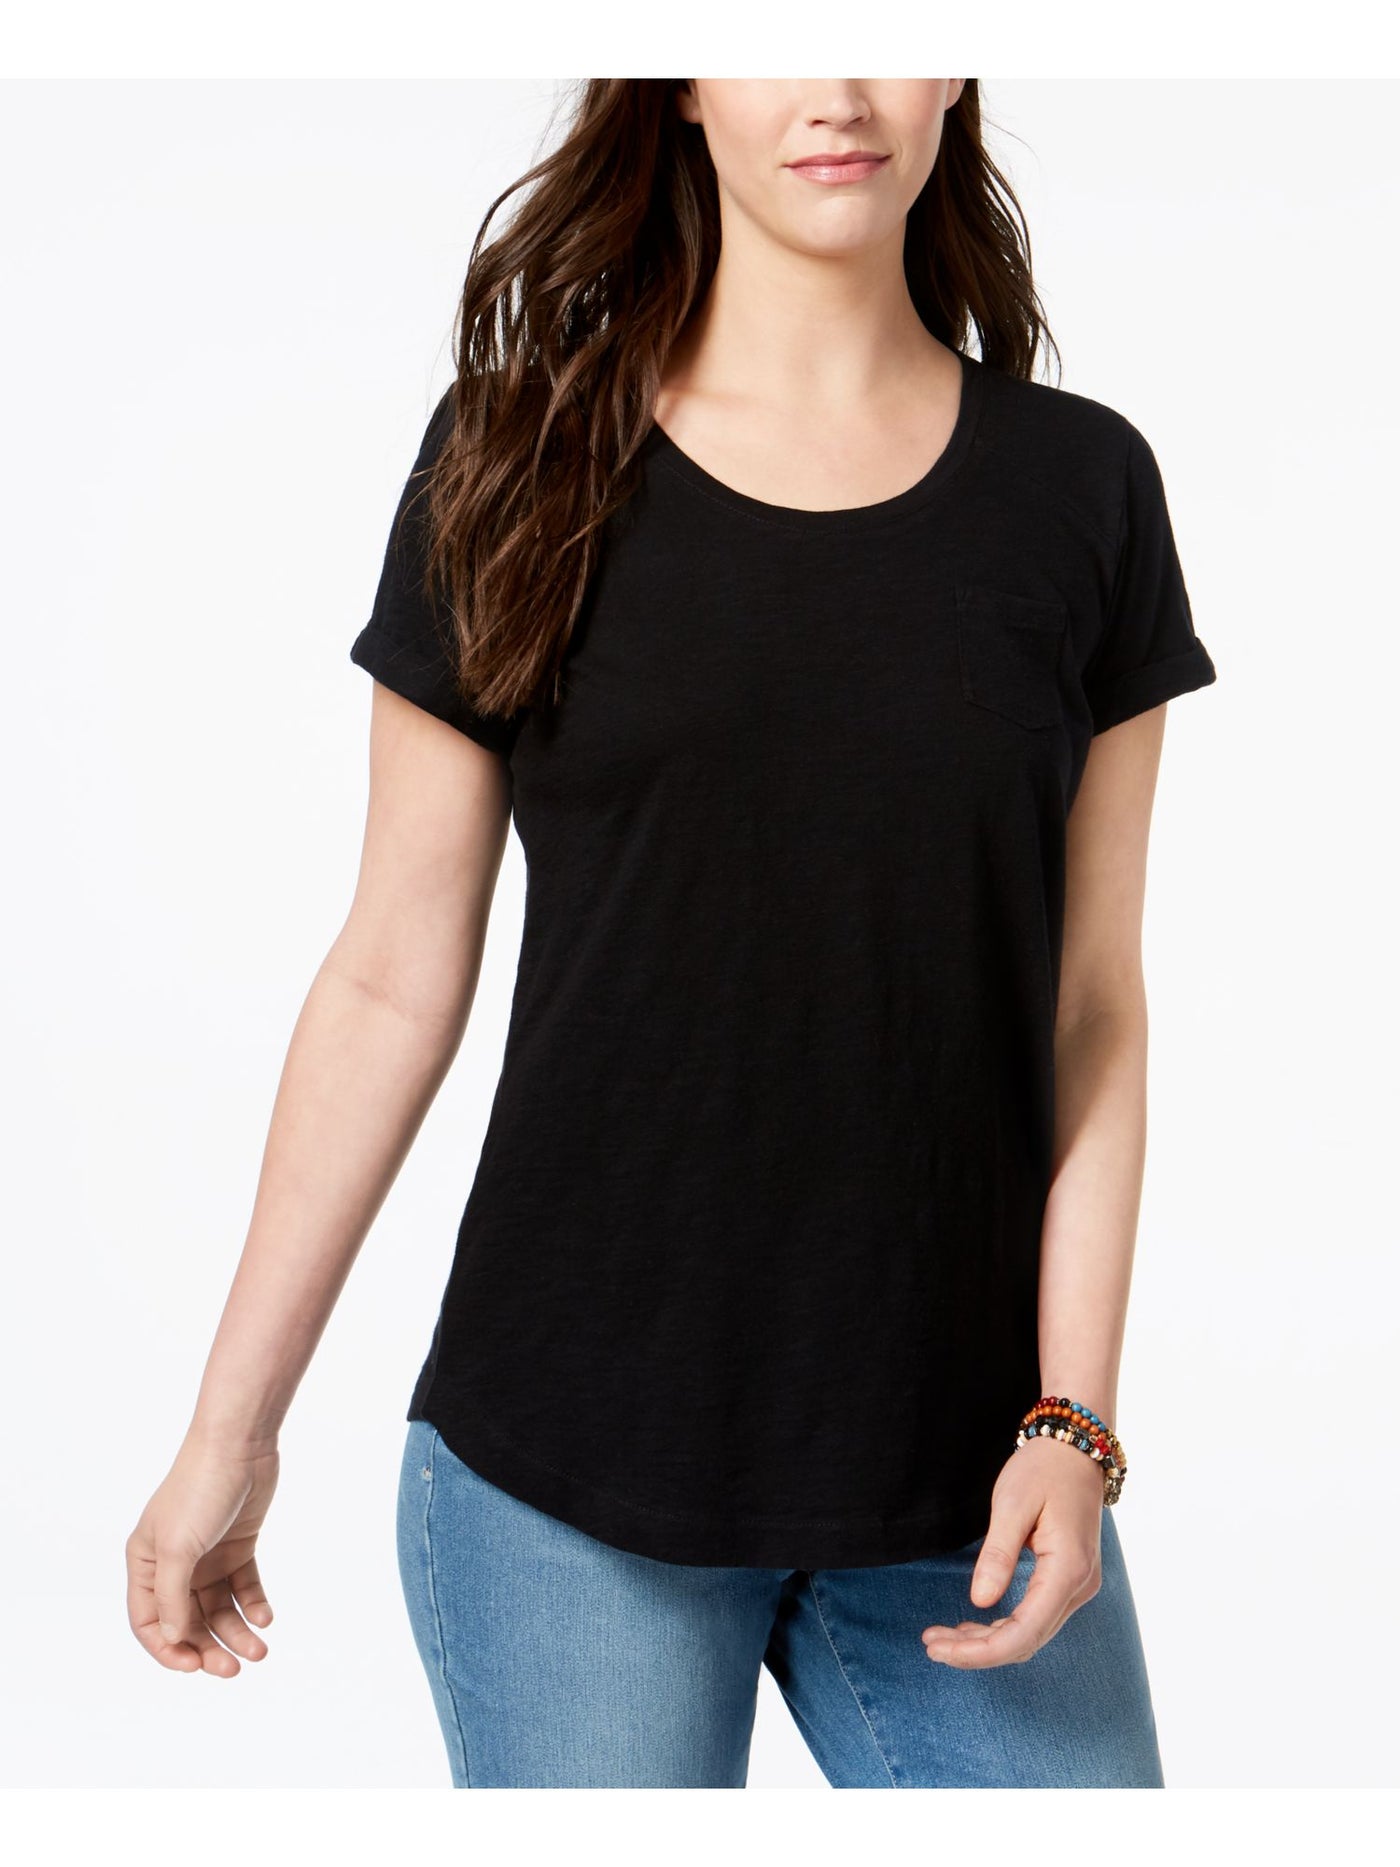 STYLE & COMPANY Womens Black Short Sleeve Crew Neck T-Shirt S